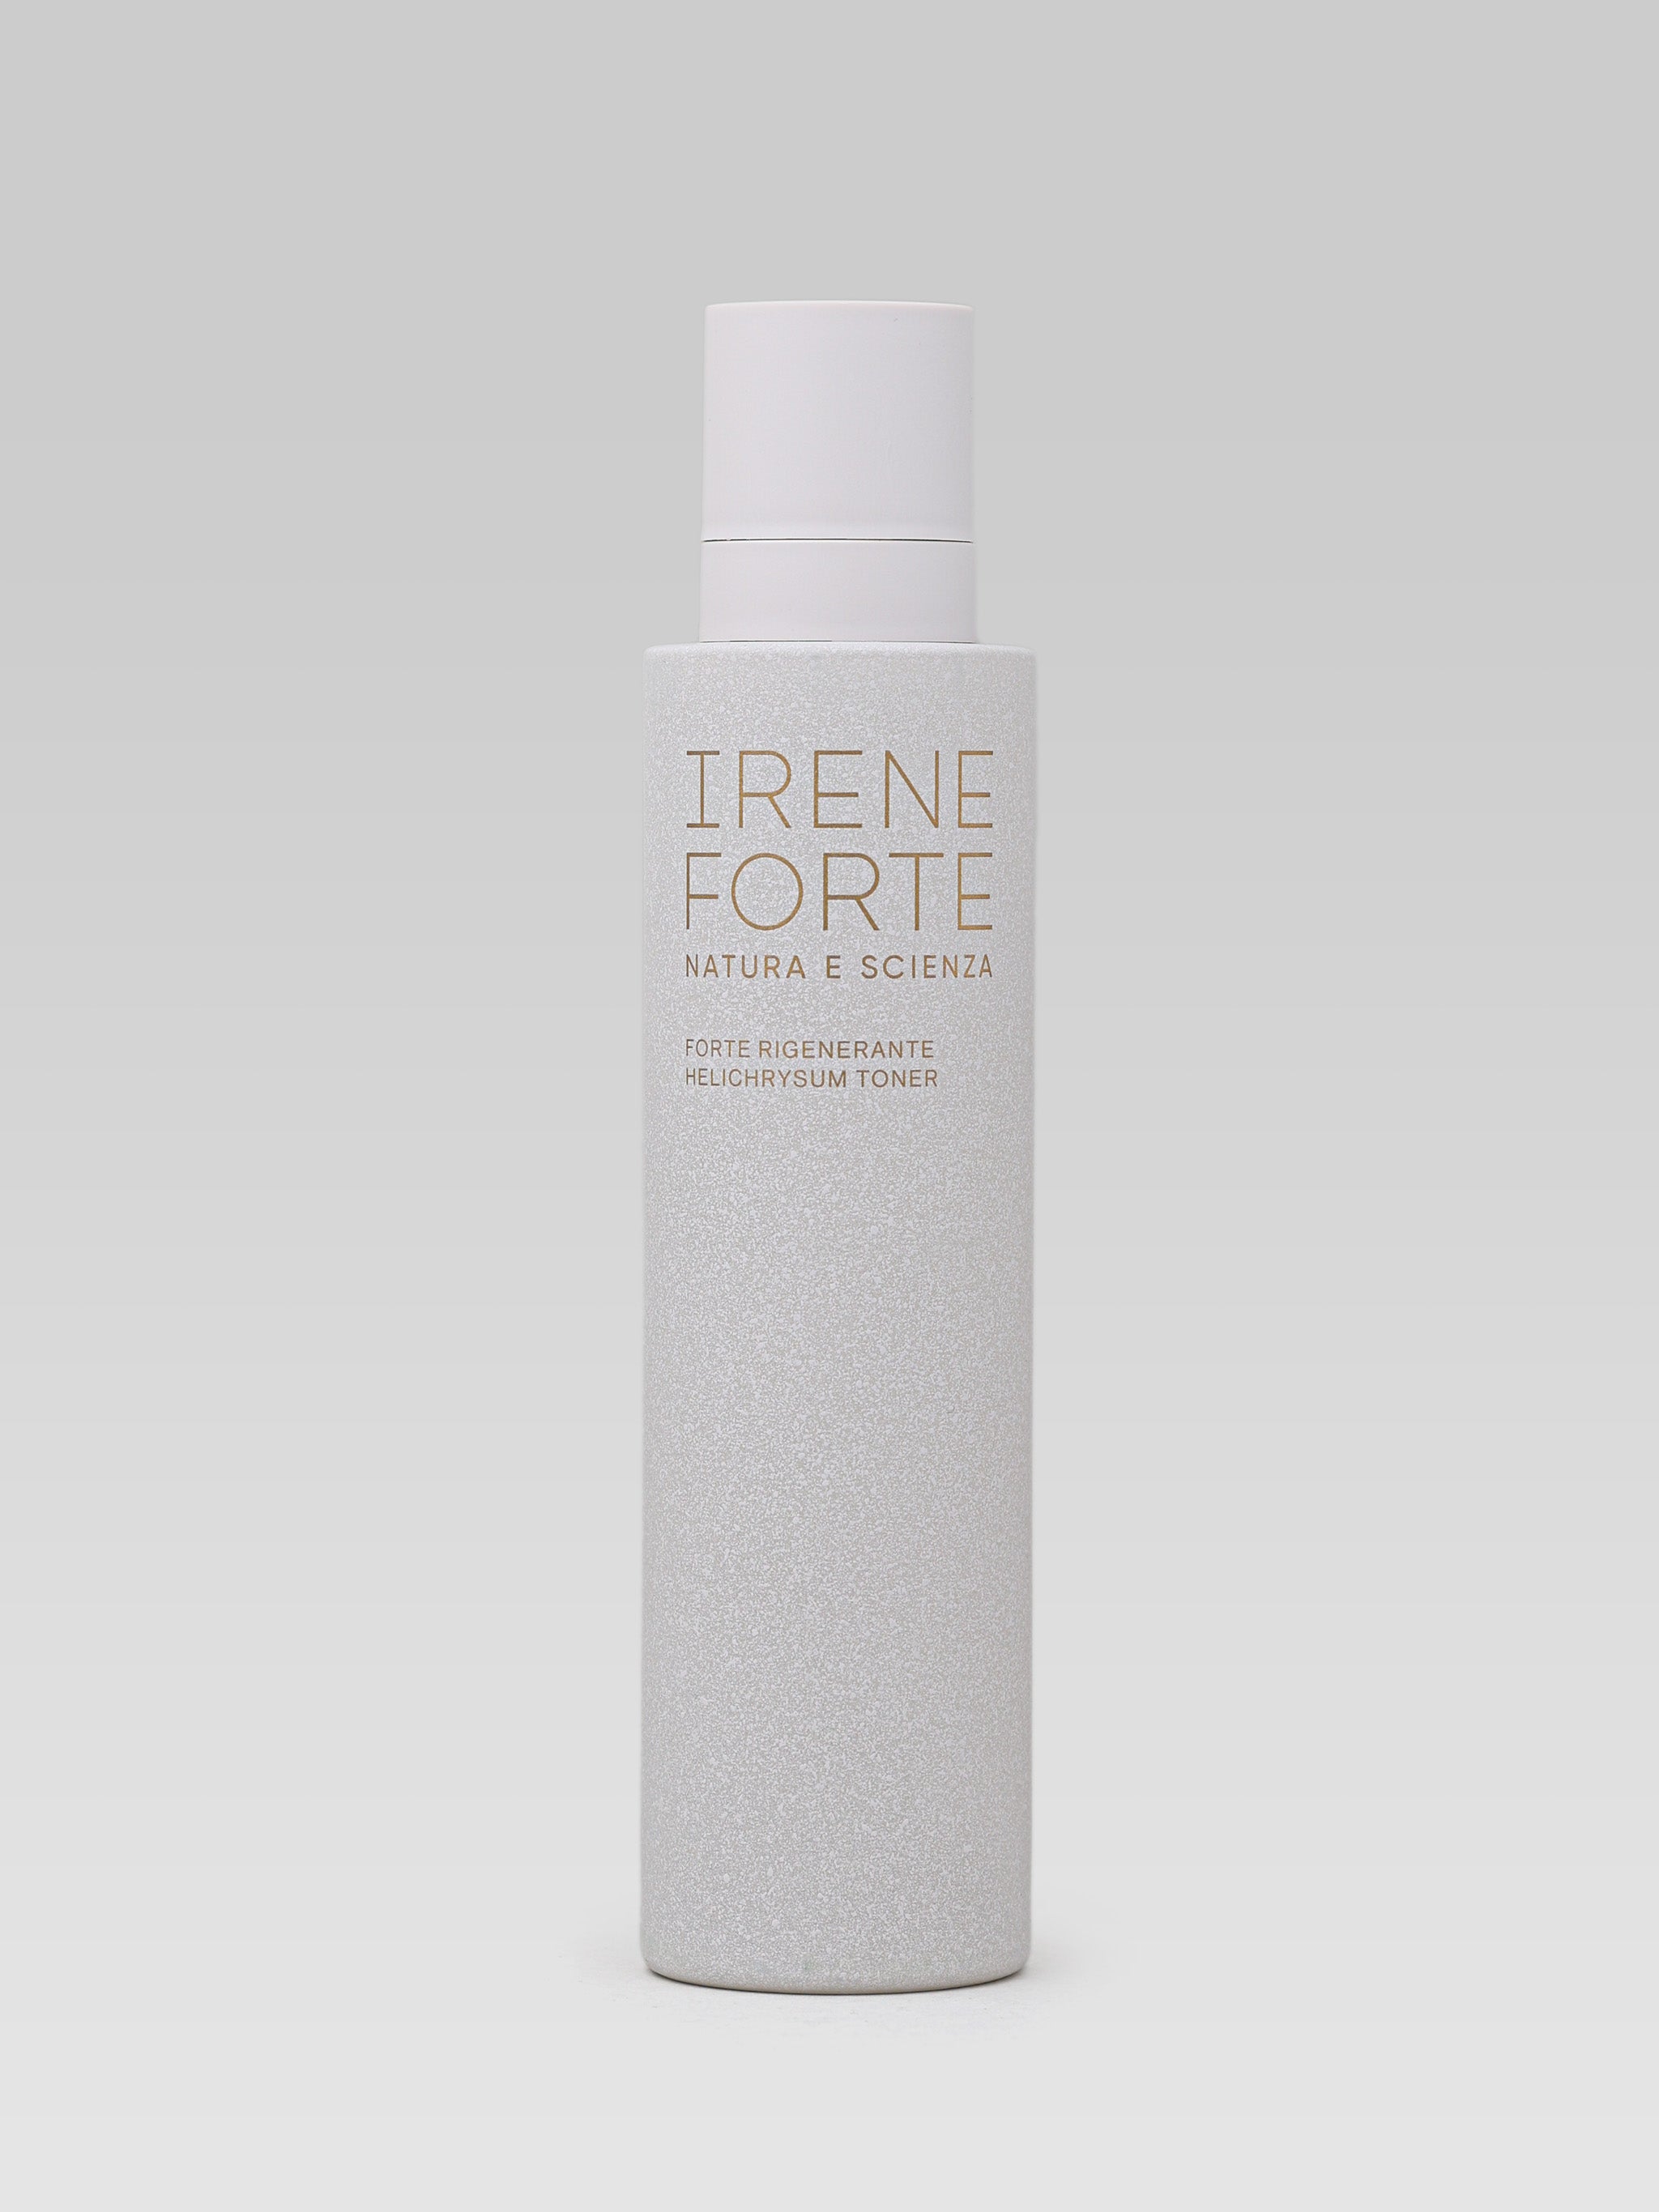 Irene Forte Helichrysum Toner product shot 